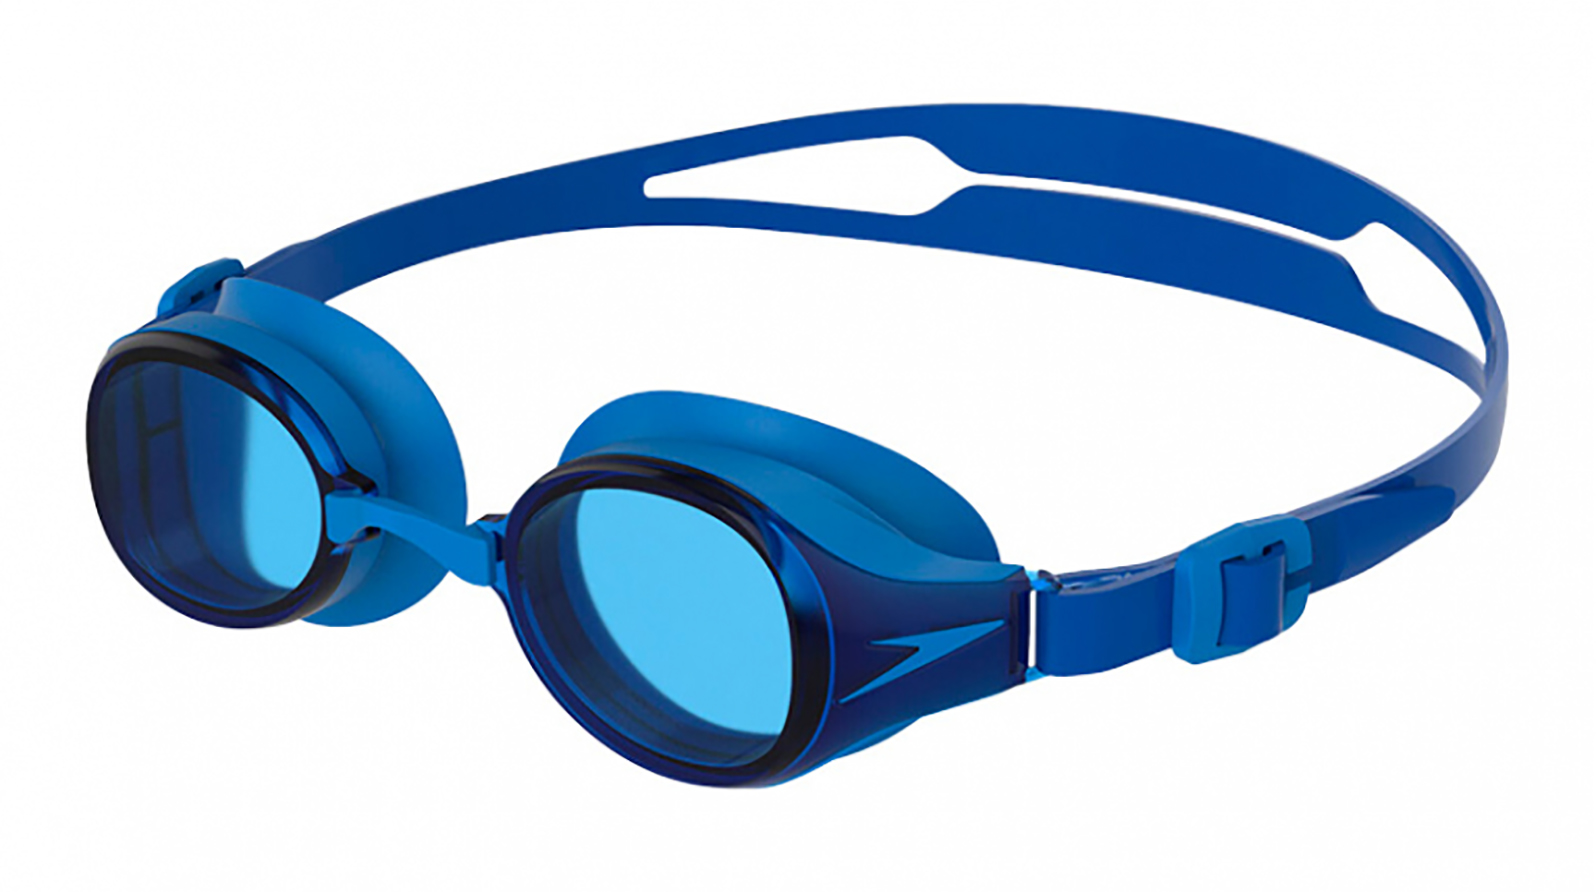 Speedo Очки для плавания Hydropure Optical F809 -4.0 очки для плавания speedo fastskin pure focus mirror